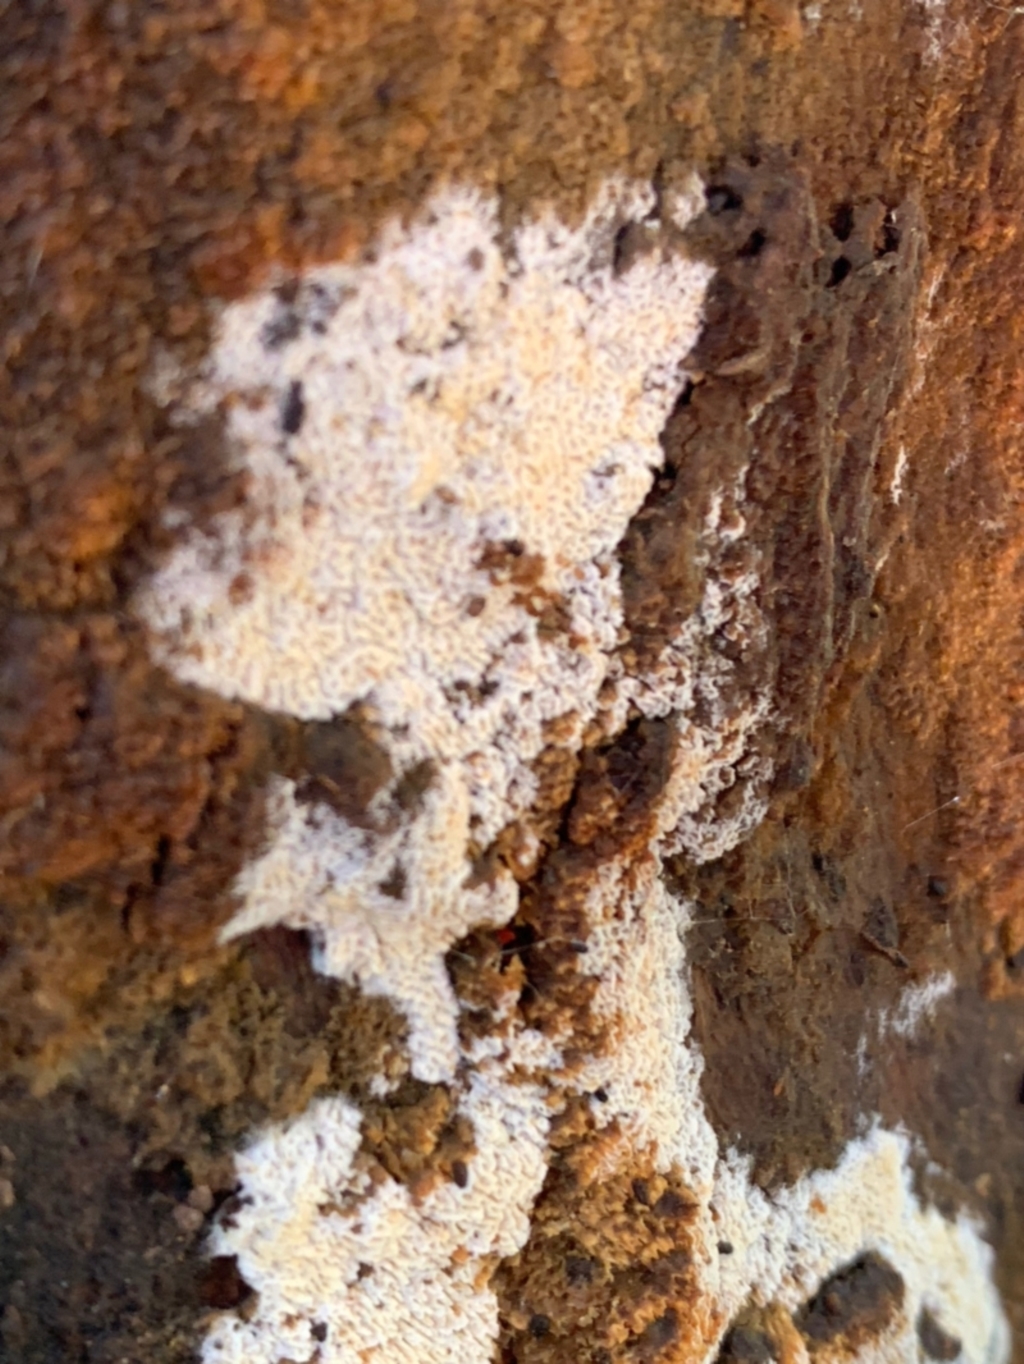 Corticioid fungi at Murrumbateman, NSW - 18 Jul 2021